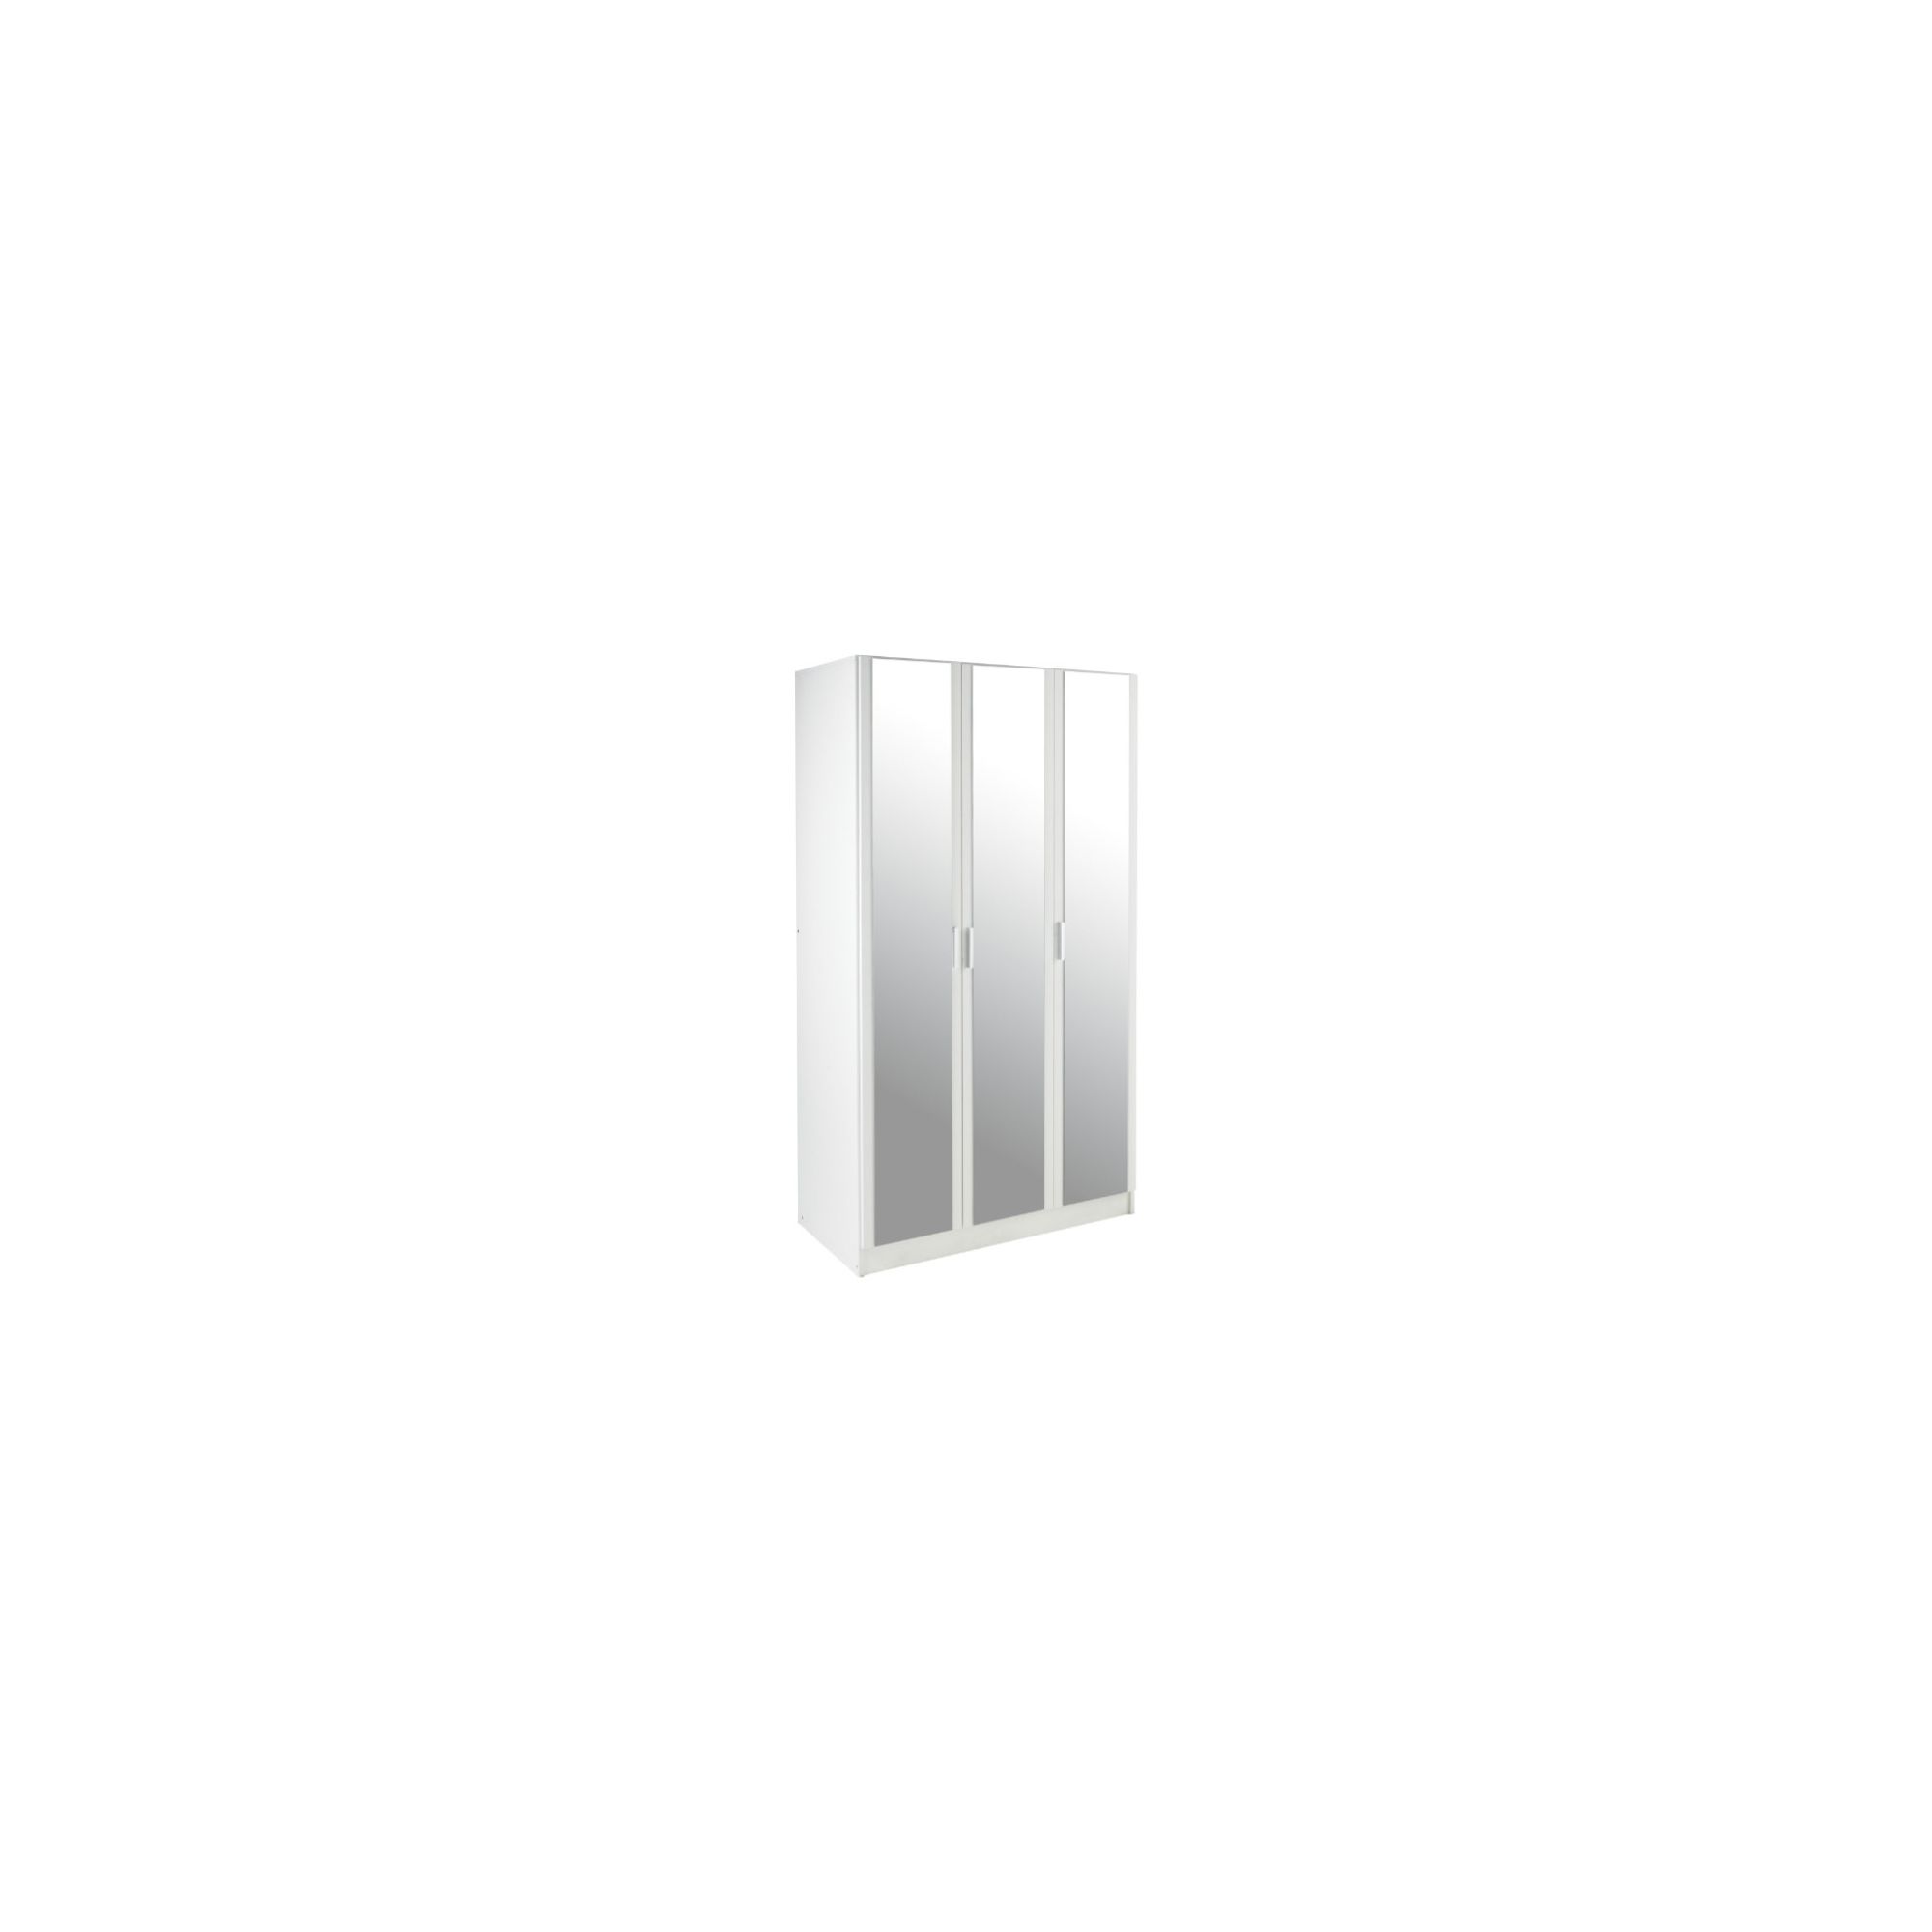 Kit Form Bella 3 Door Mirrored Wardrobe - White at Tescos Direct